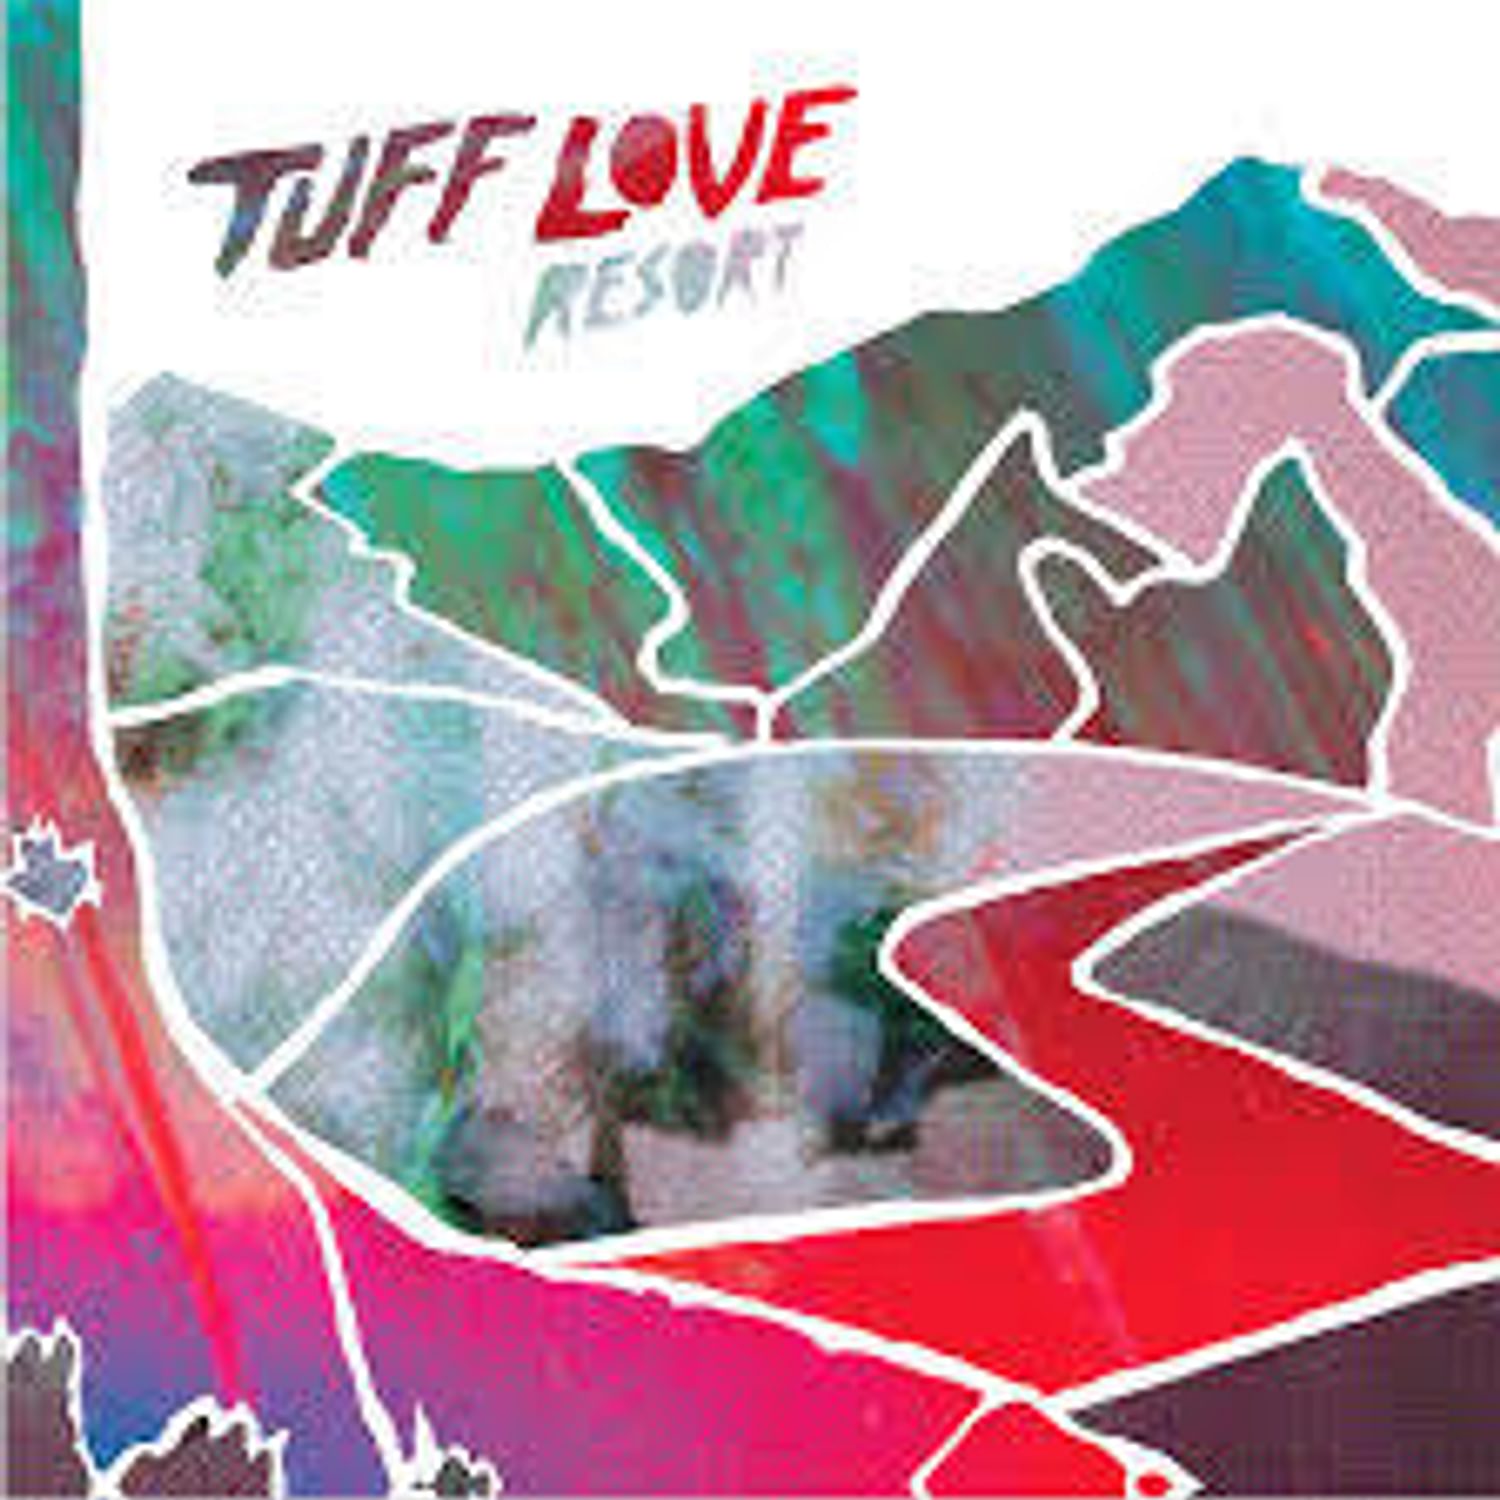 Tuff Love - Resort